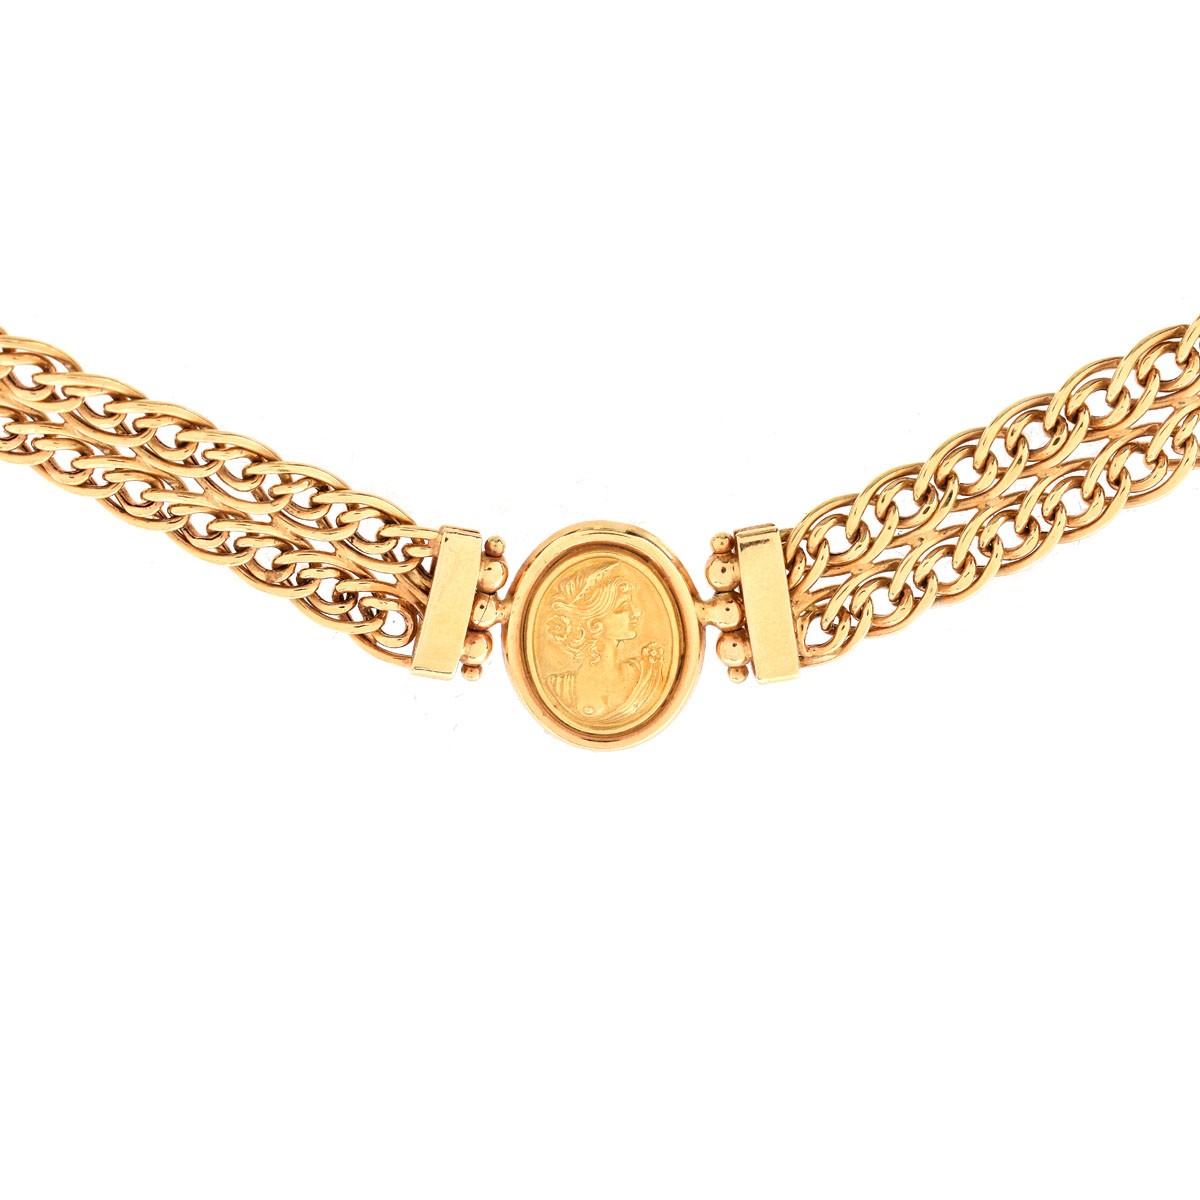 Vintage Italian 18K Gold Necklace - Image 2 of 4